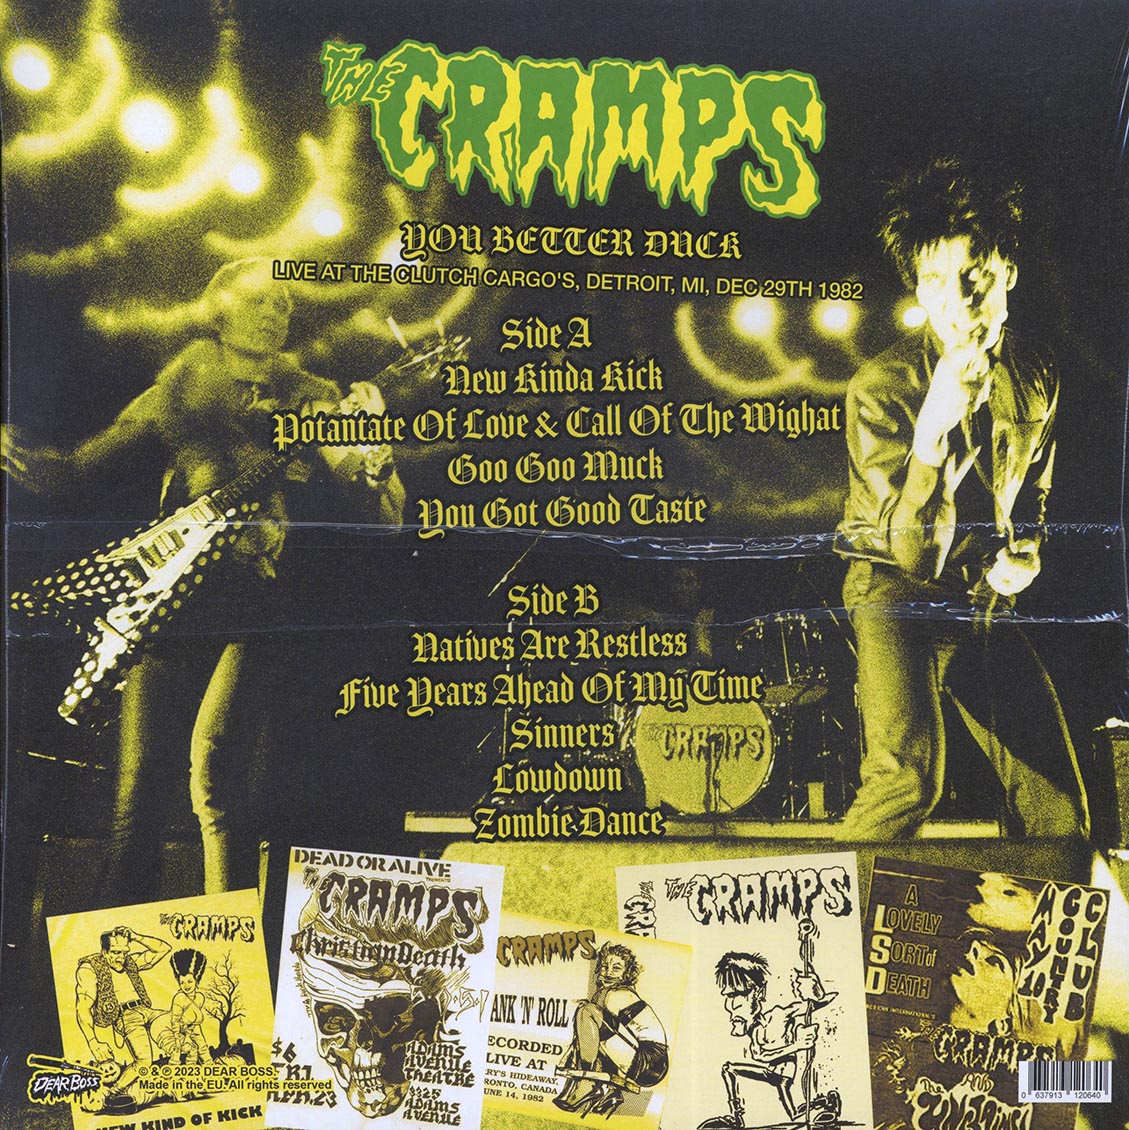 The Cramps - You Better Duck: Live At The Clutch Cargo's, Detroit, MI, Dec 29th 1982 (ltd. 300 copies made) (green vinyl) - Vinyl LP, LP